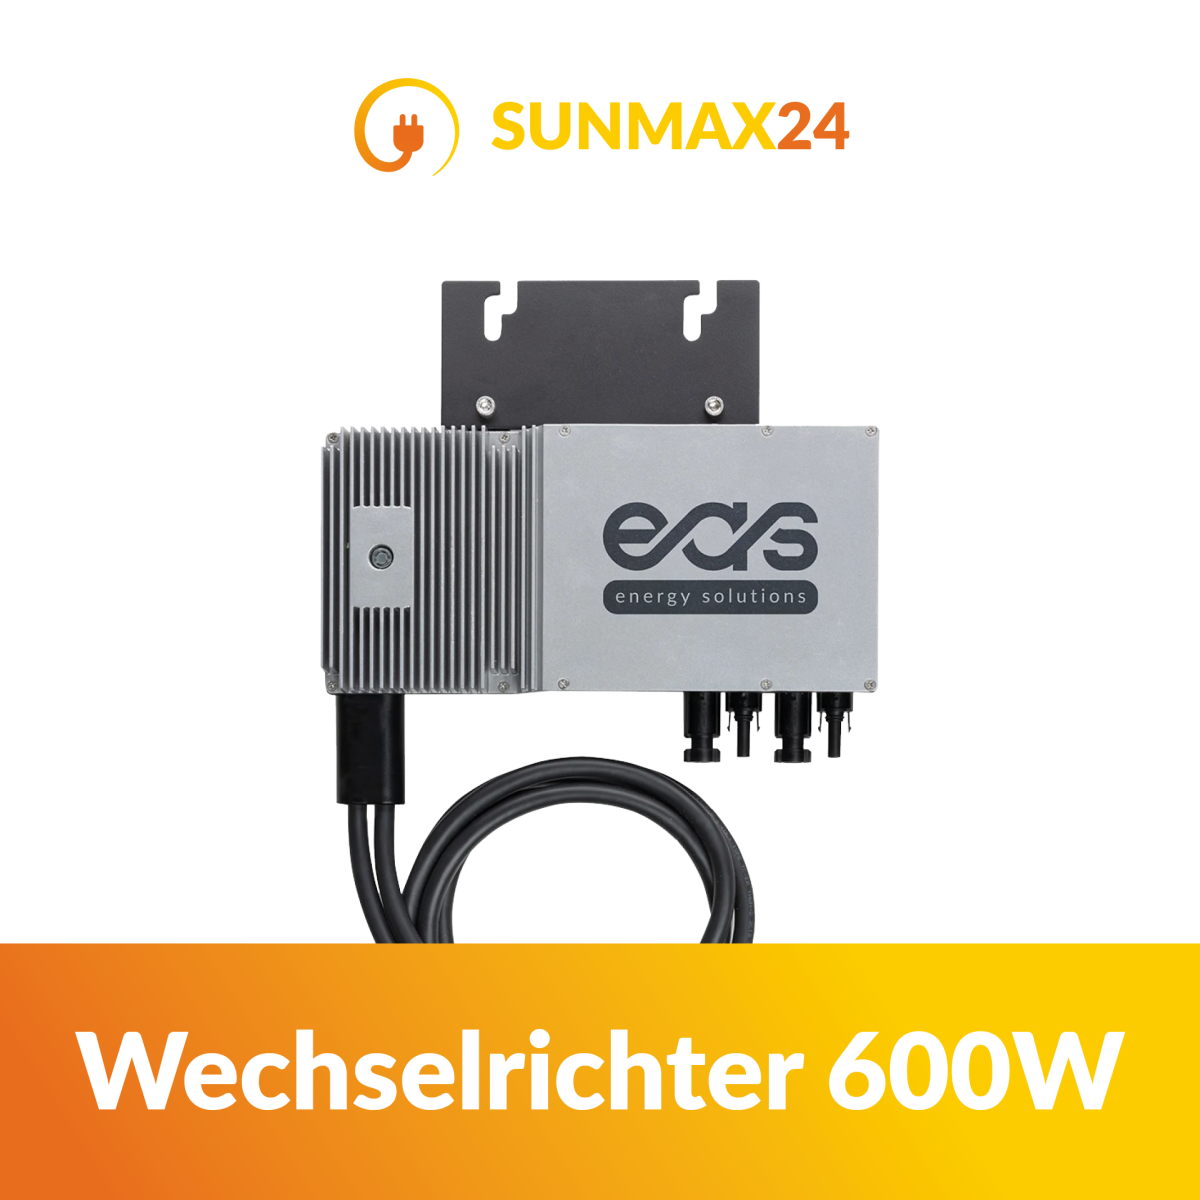 https://shop.sunmax24.com/media/image/product/458/lg/mikrowechselrichter-modulwechselrichter-nep-eas-600-w-smart-wifi-app-energymeter~11.png